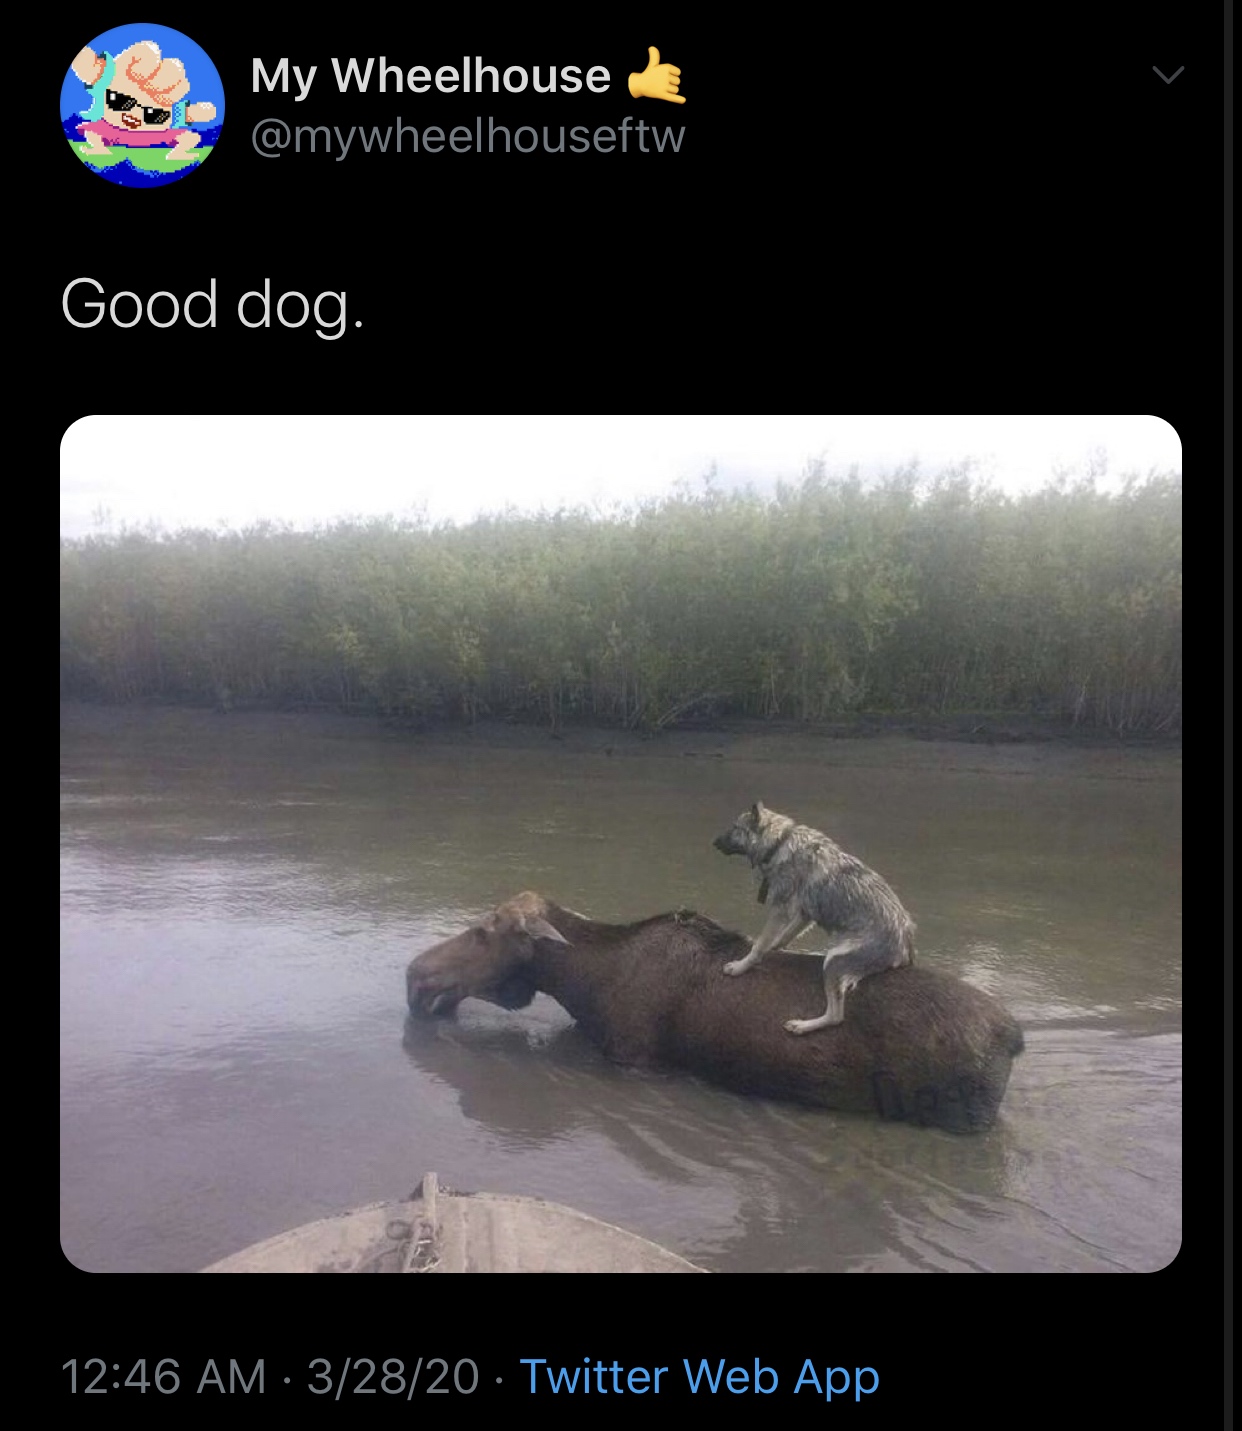 we ride at dawn meme - My Wheelhouse Good dog. 32820 Twitter Web App